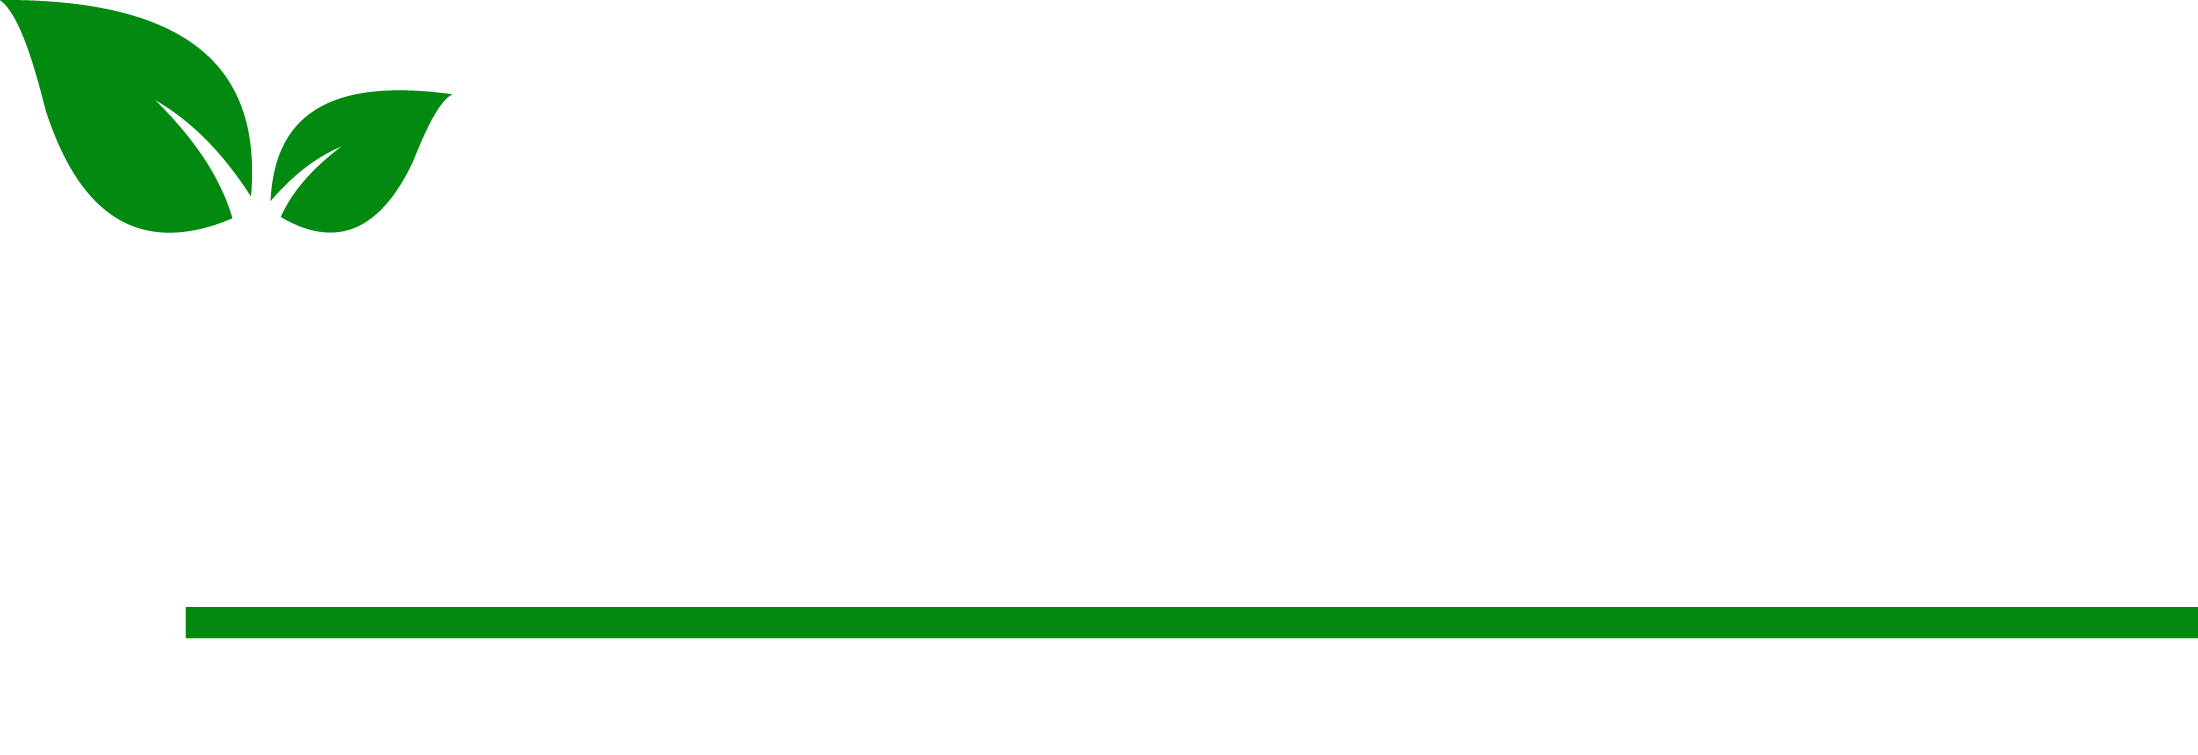 IstrawU_logo